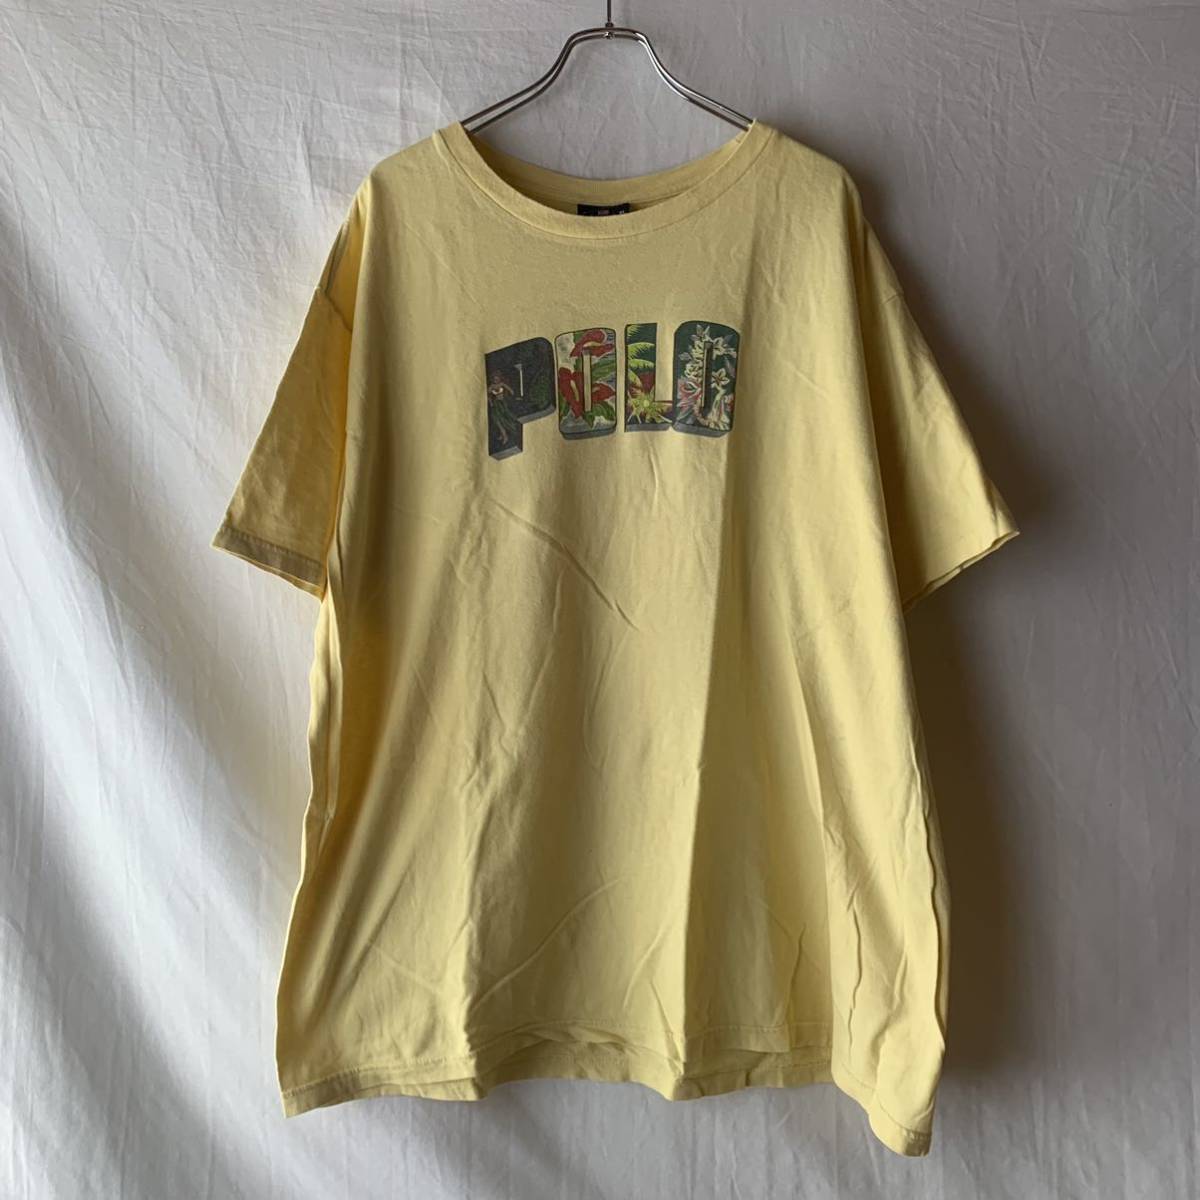 80s 90s USA製 POLO SPORT RALPH LAUREN ラルフローレン ポロスポーツ アメリカ製 ロゴ Tシャツ ヴィンテージ イエロー 黄色 XL ハワイアン